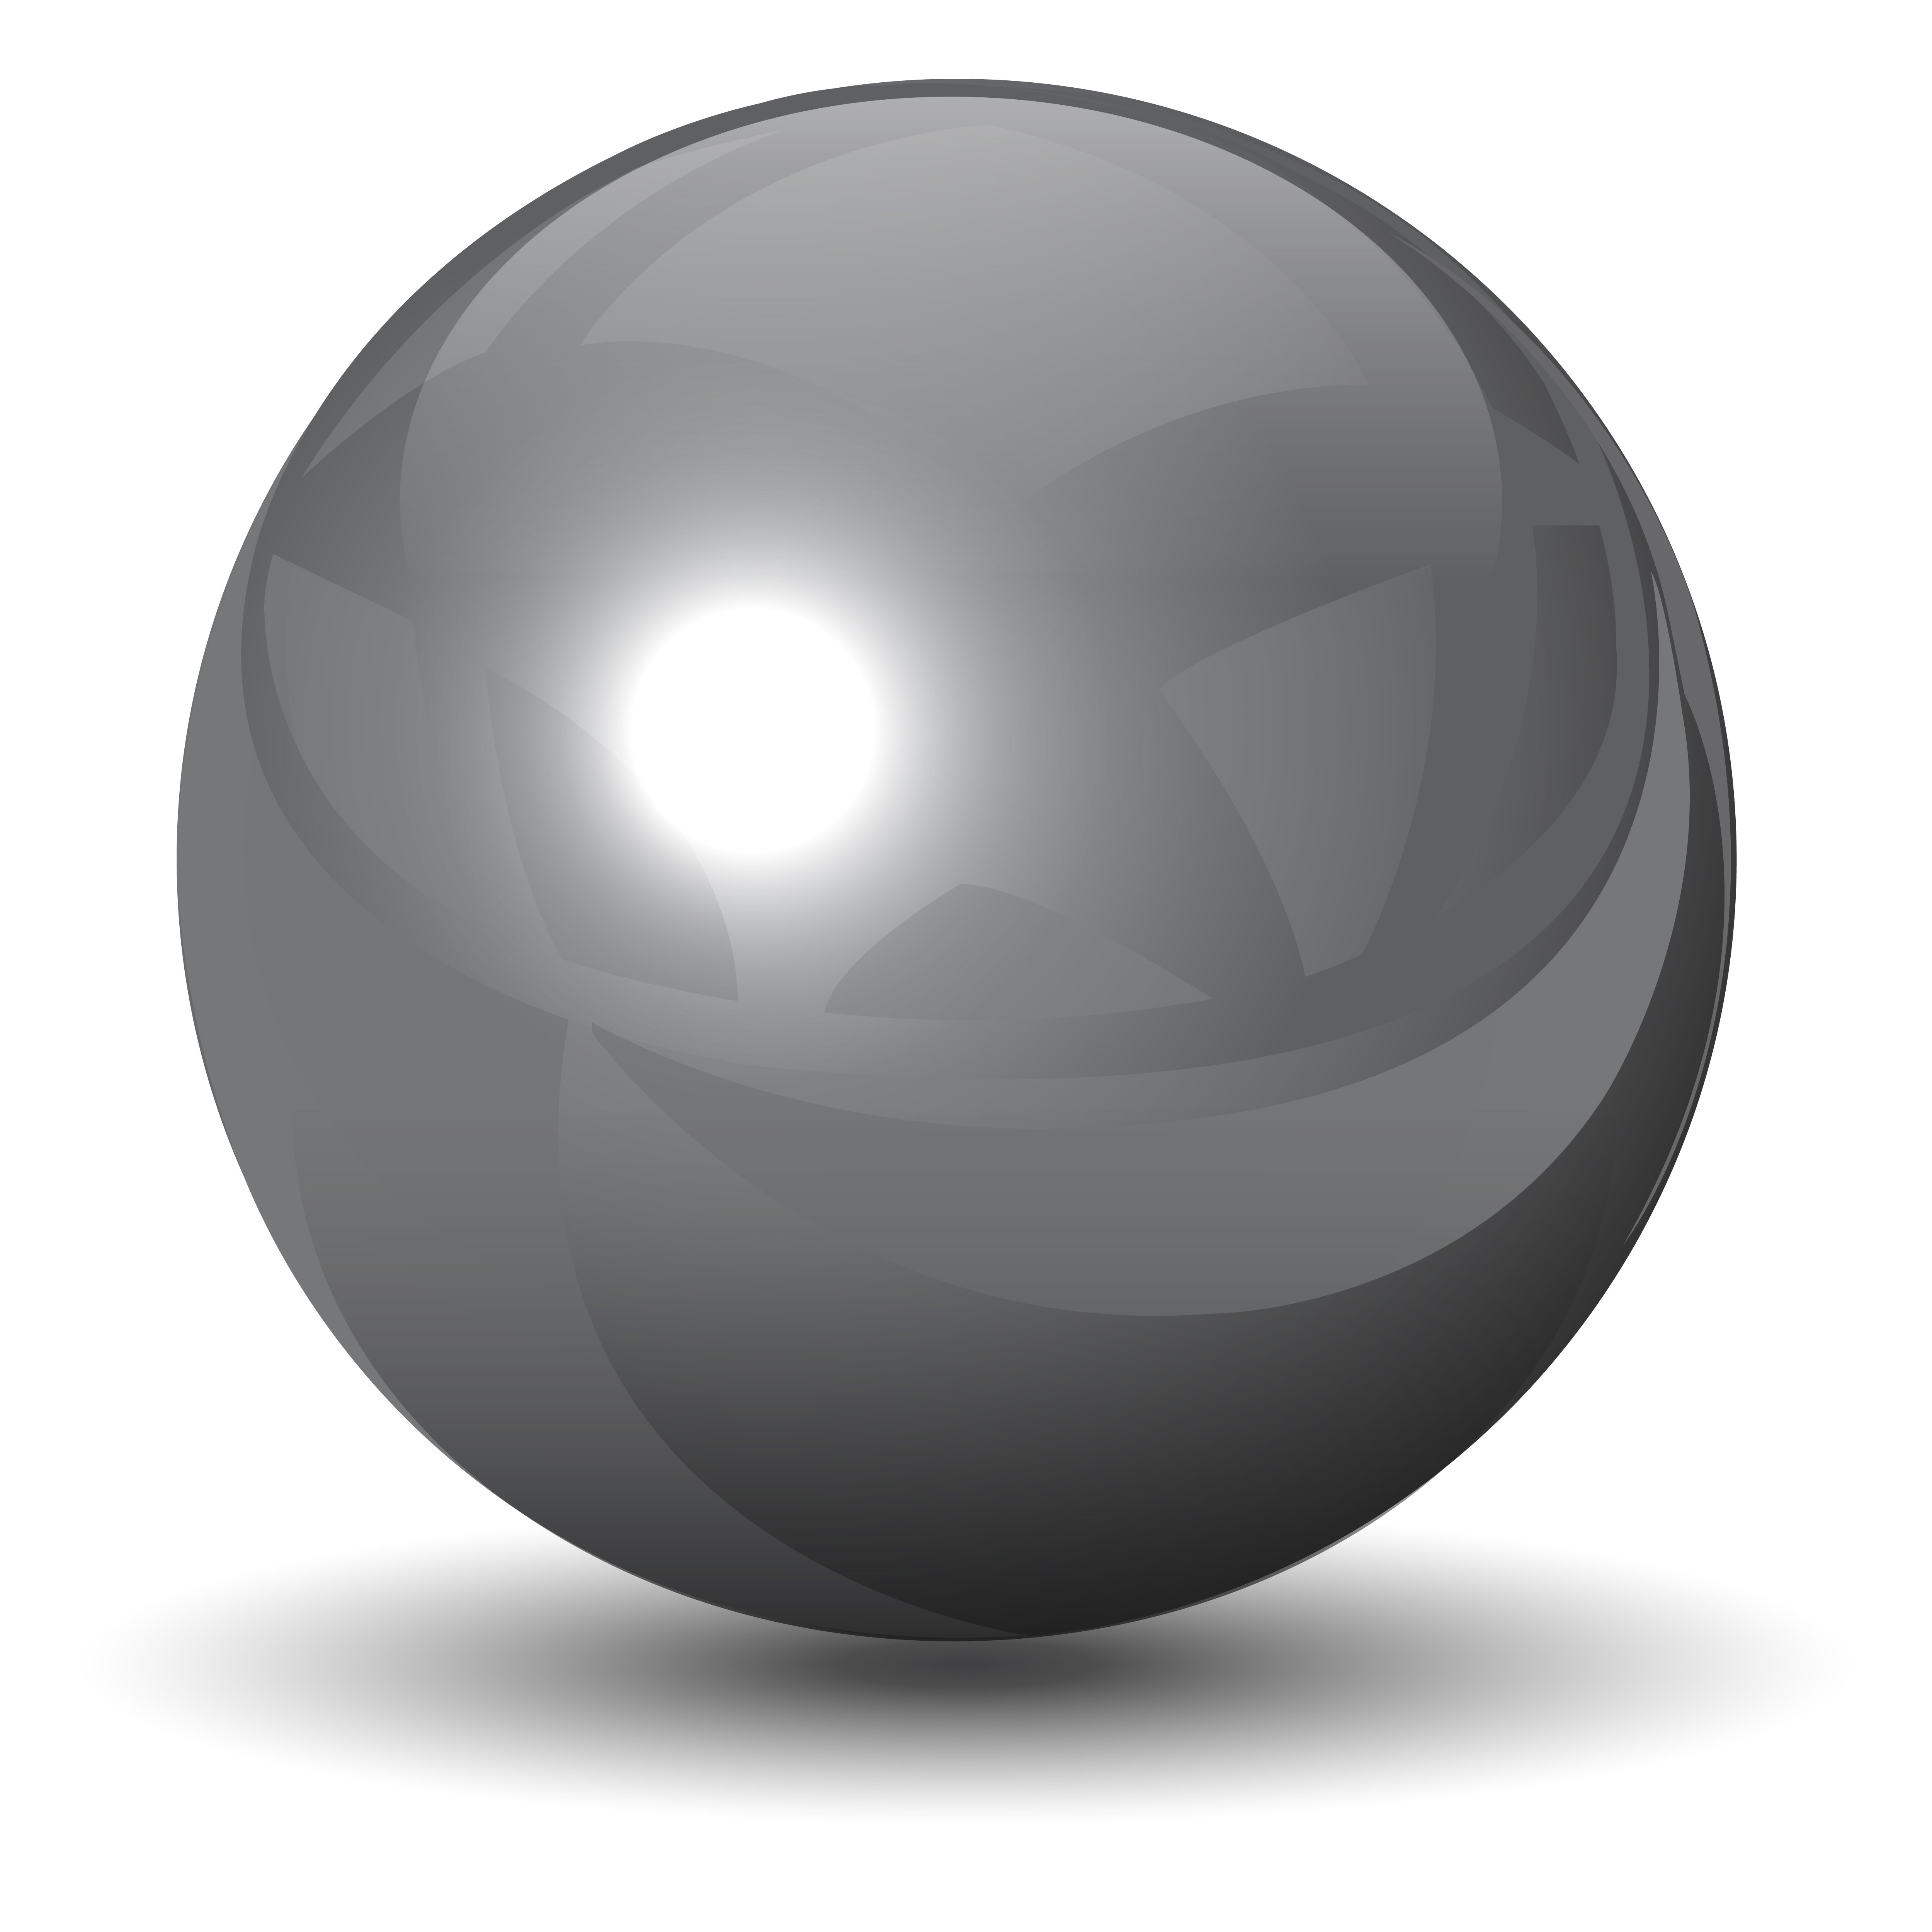 Металлический шар. Хромированный металлический шар. Металлическая сфера. Серебряный металлический шарик.